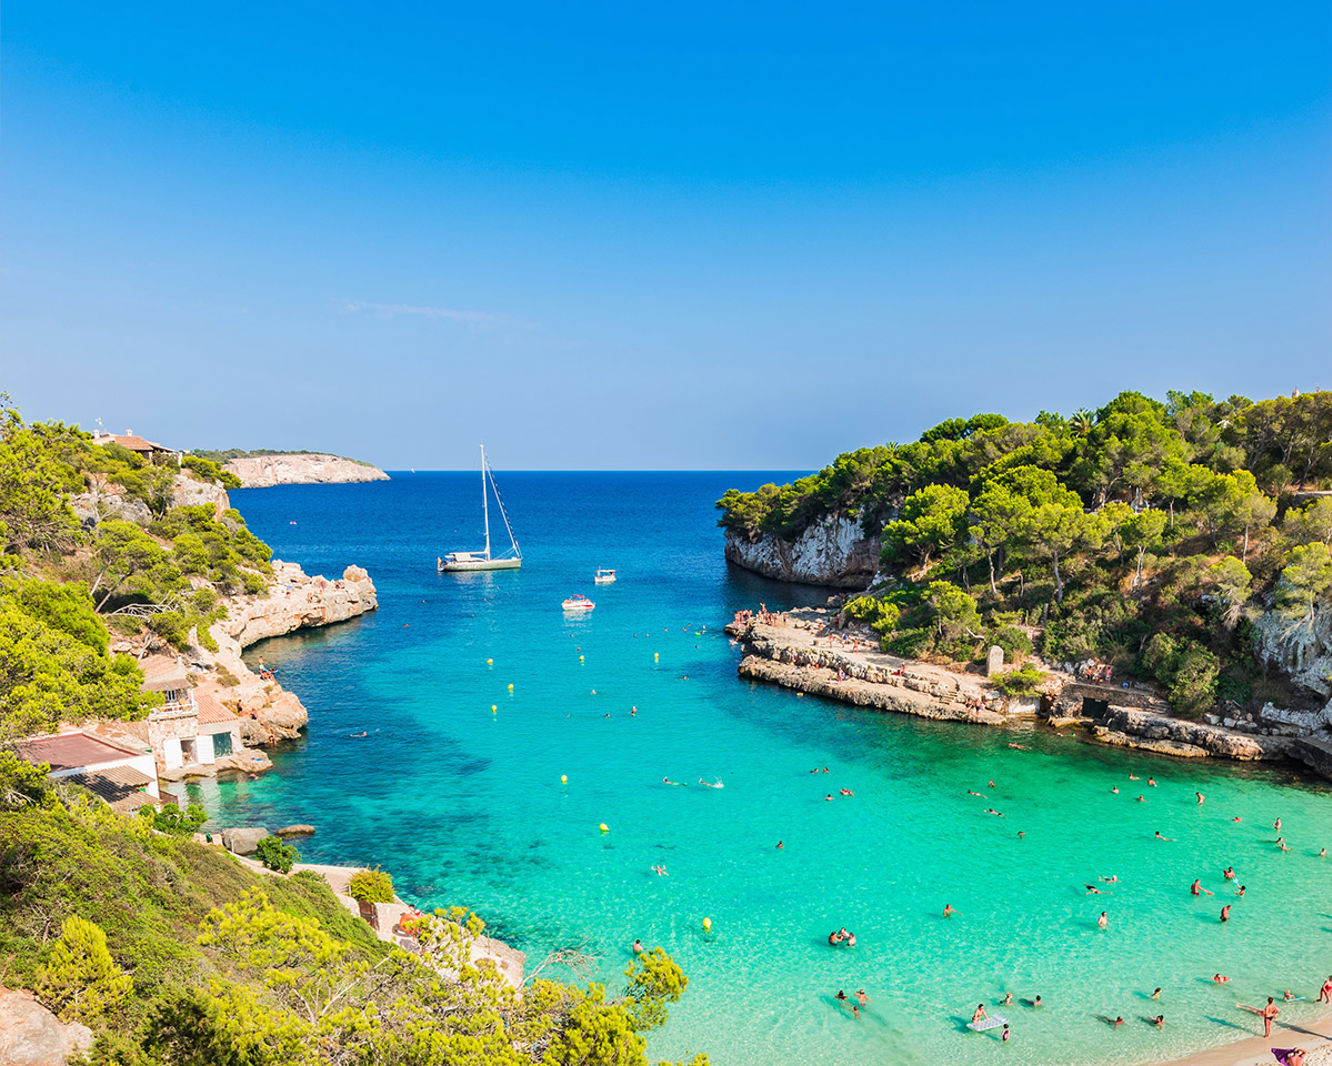 Taiko buik Merchandising Schipbreuk Vakantie Mallorca - Goedkope vakanties 2023 - Corendon